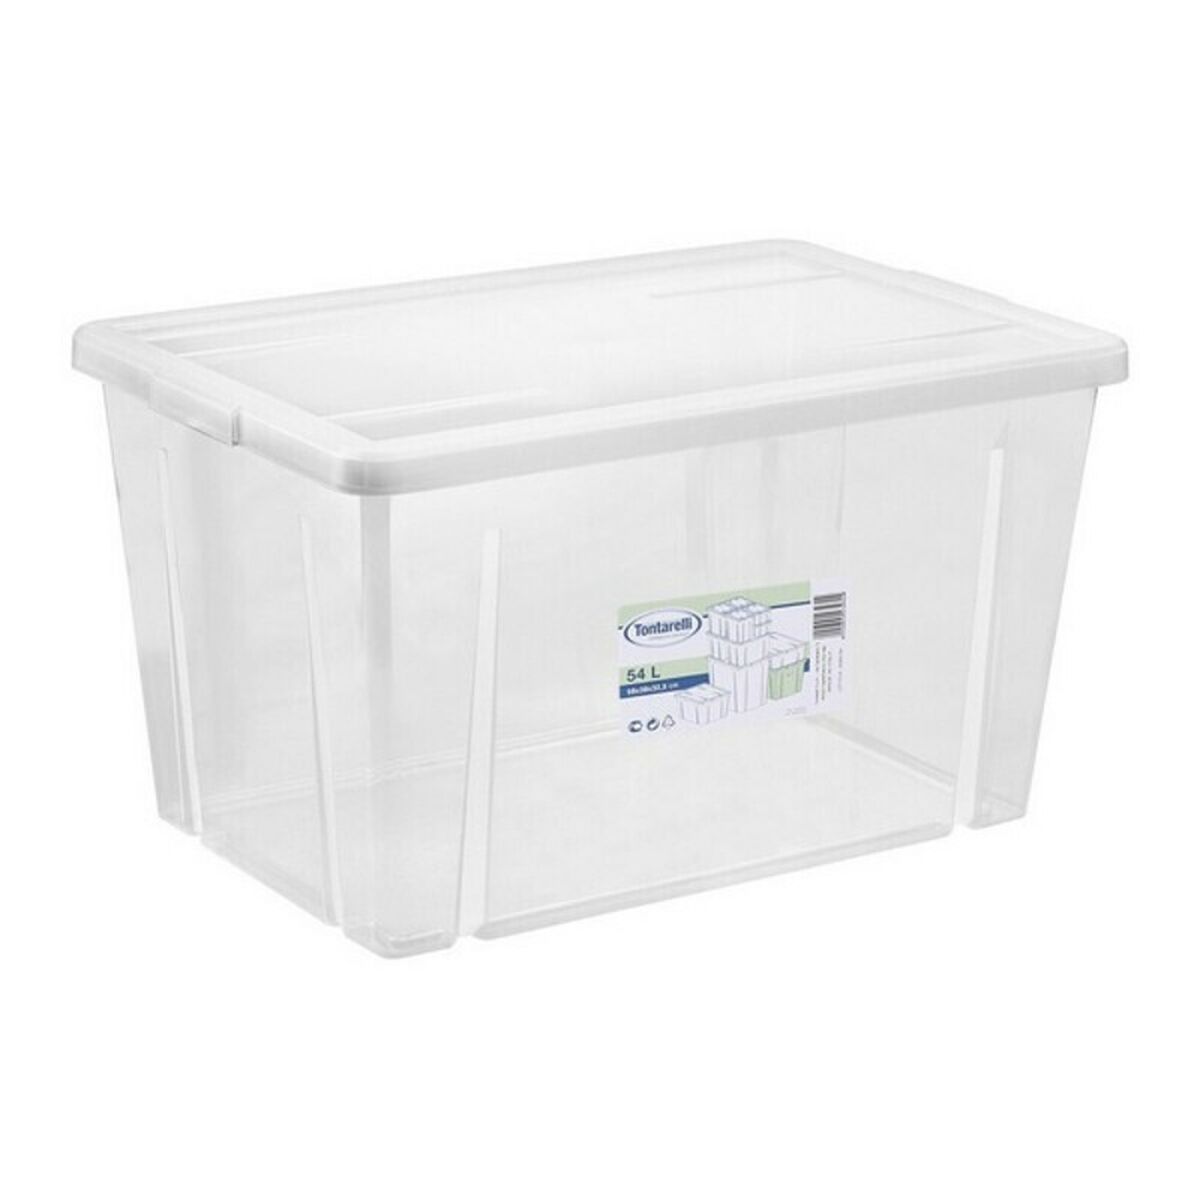 Storage Box with Lid Tontarelli 54 L Transparent (59 X 39 x 33 cm)